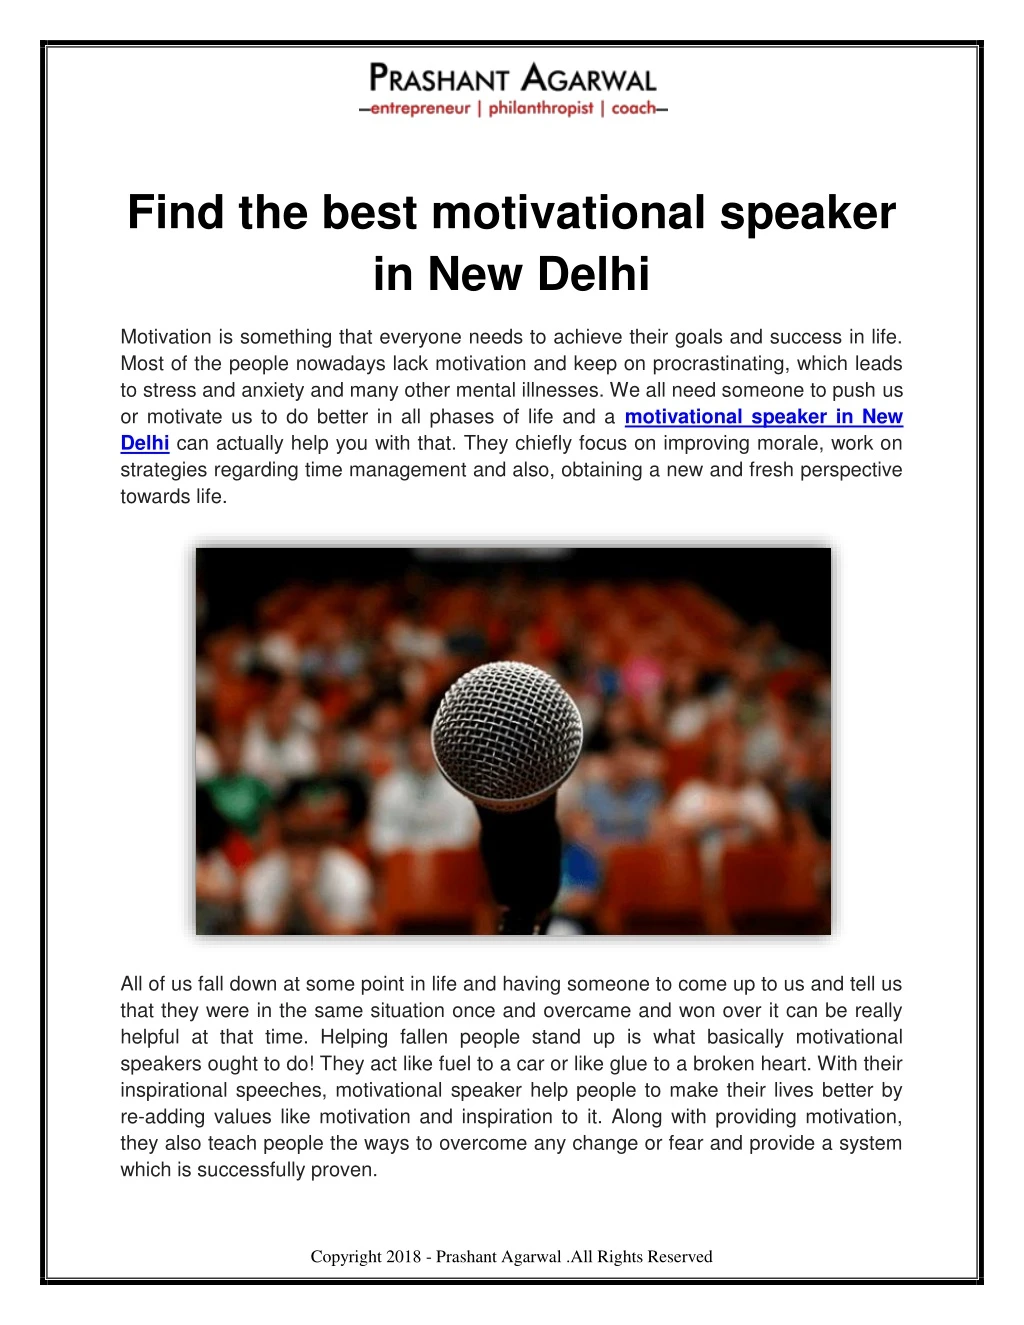 find the best motivational speaker in new delhi